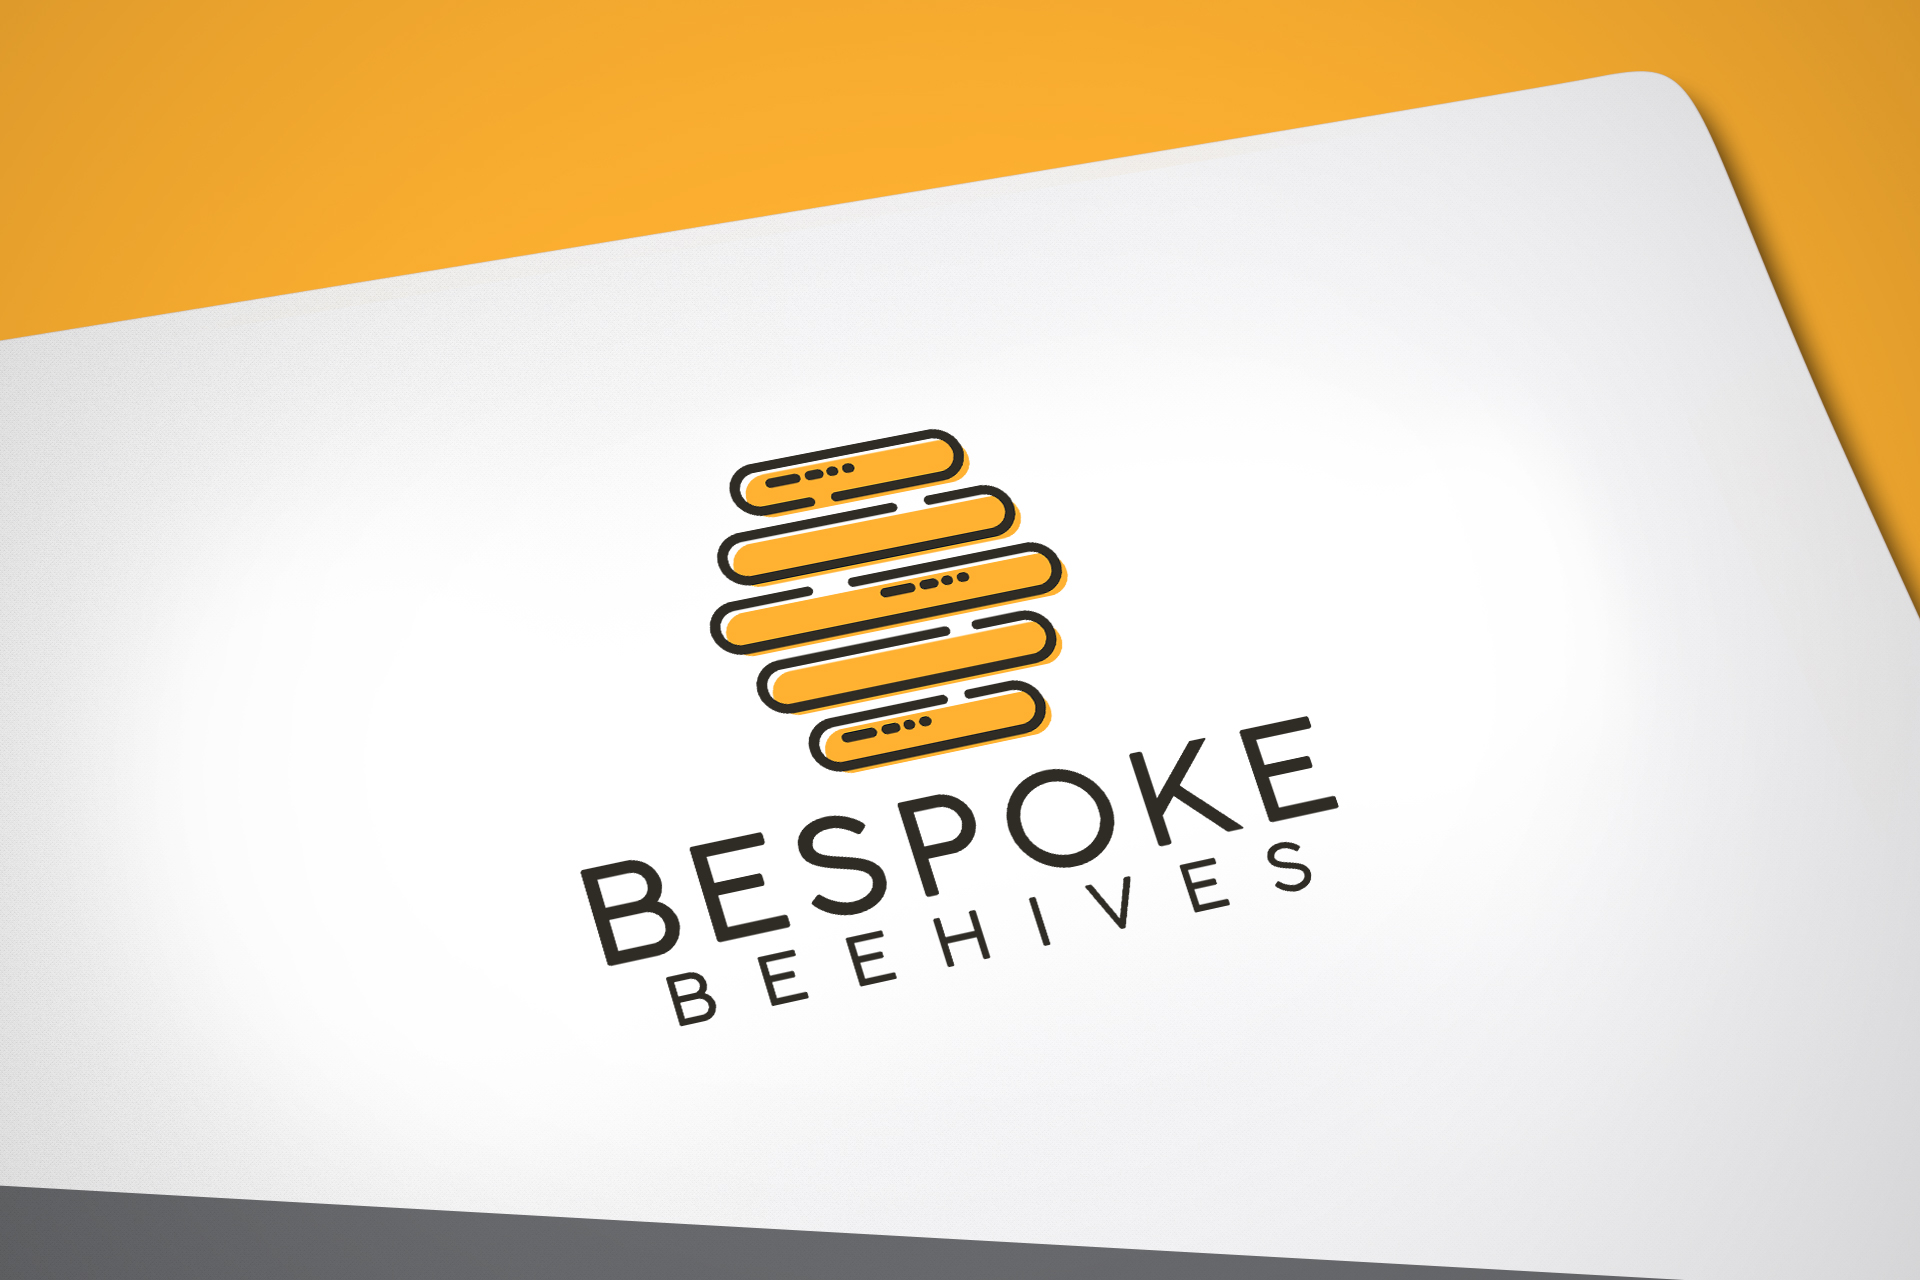 Bespoke Beehives Design #4